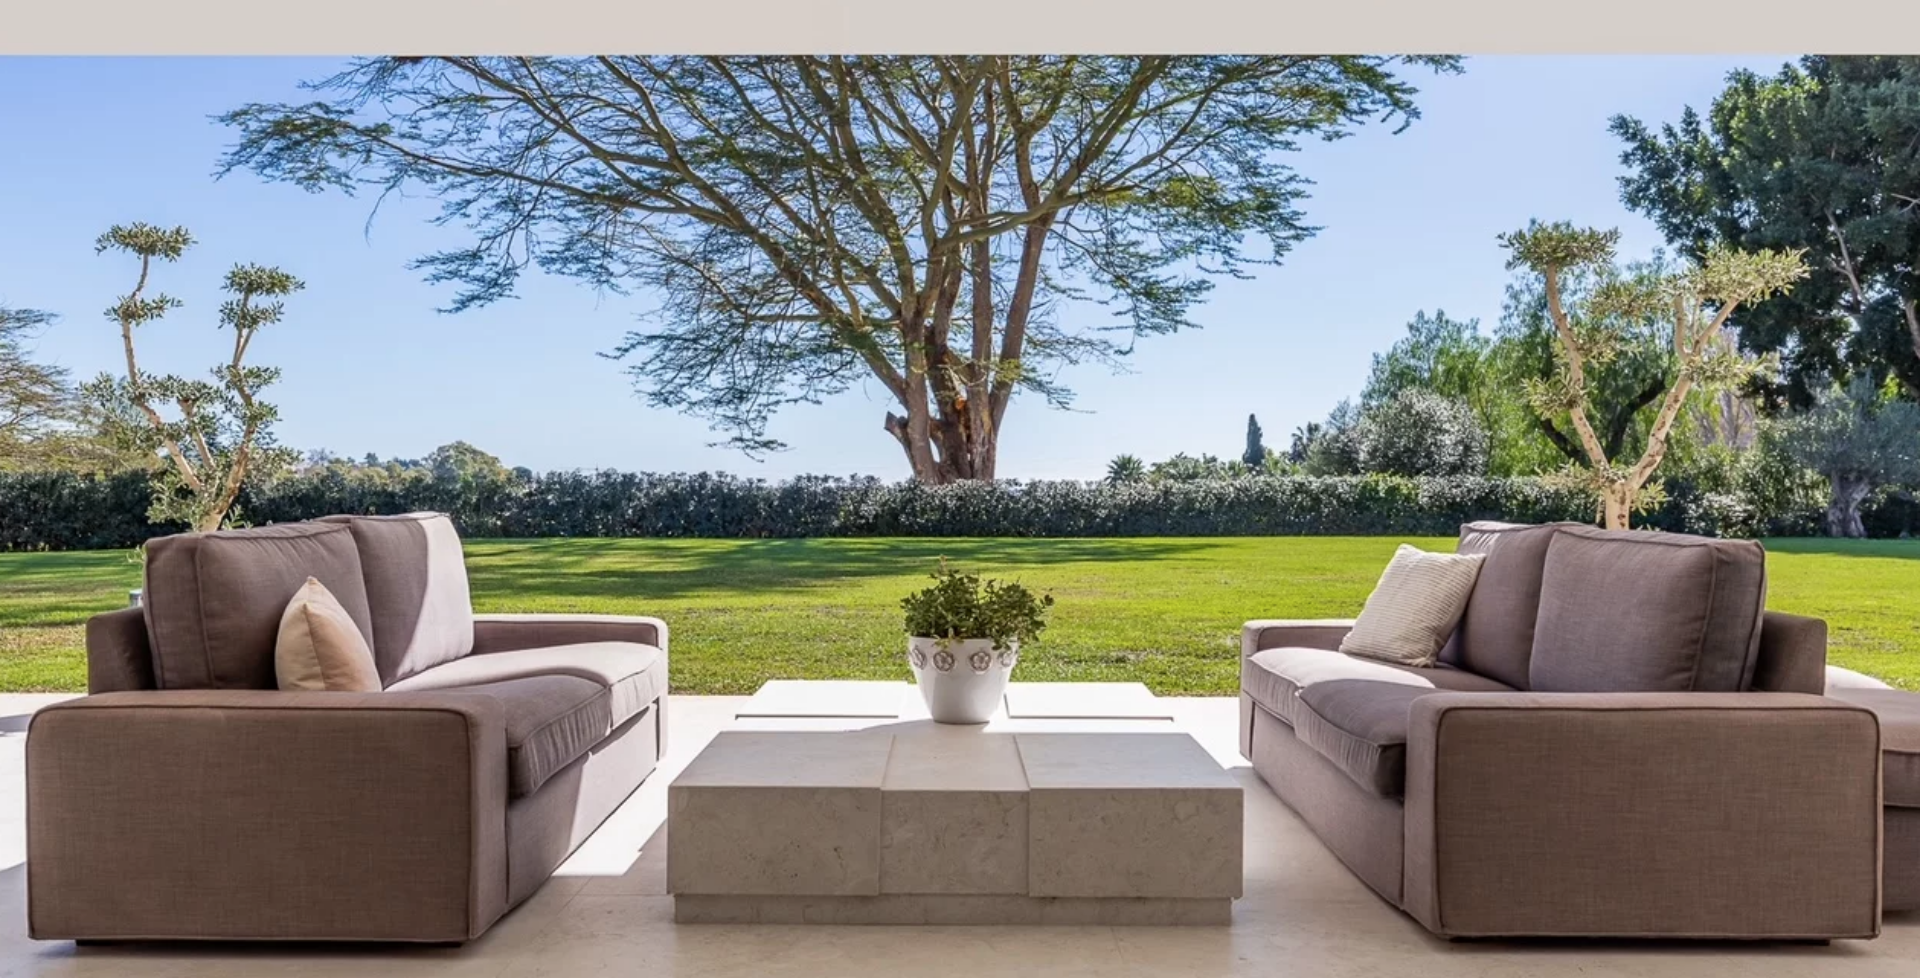 Villa-Soul-6-bedroom-luxury-villa-Marbella-seating-outside